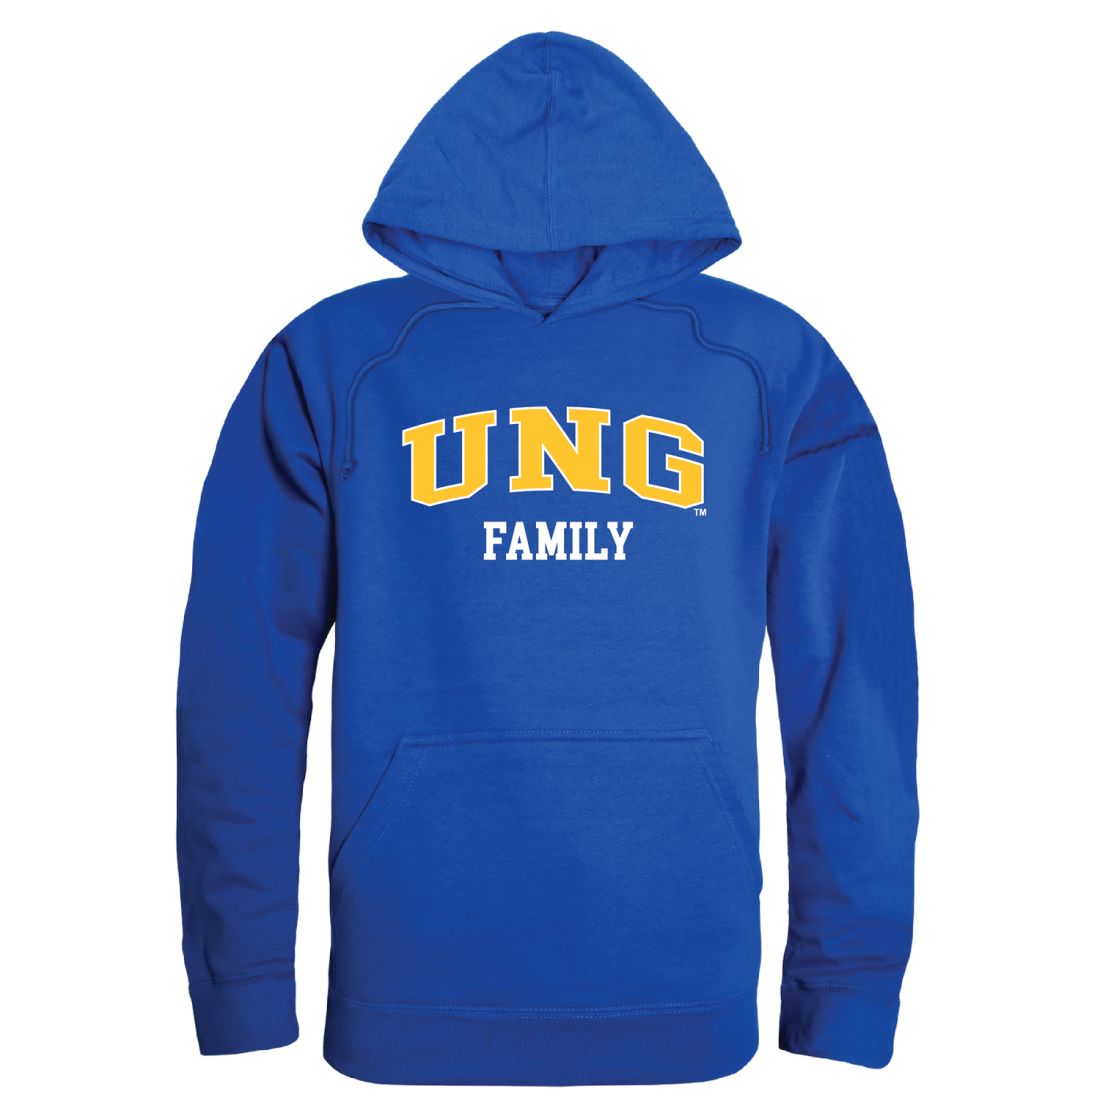 University of North Georgia Nighthawks Family Hoodie Sweatshirts